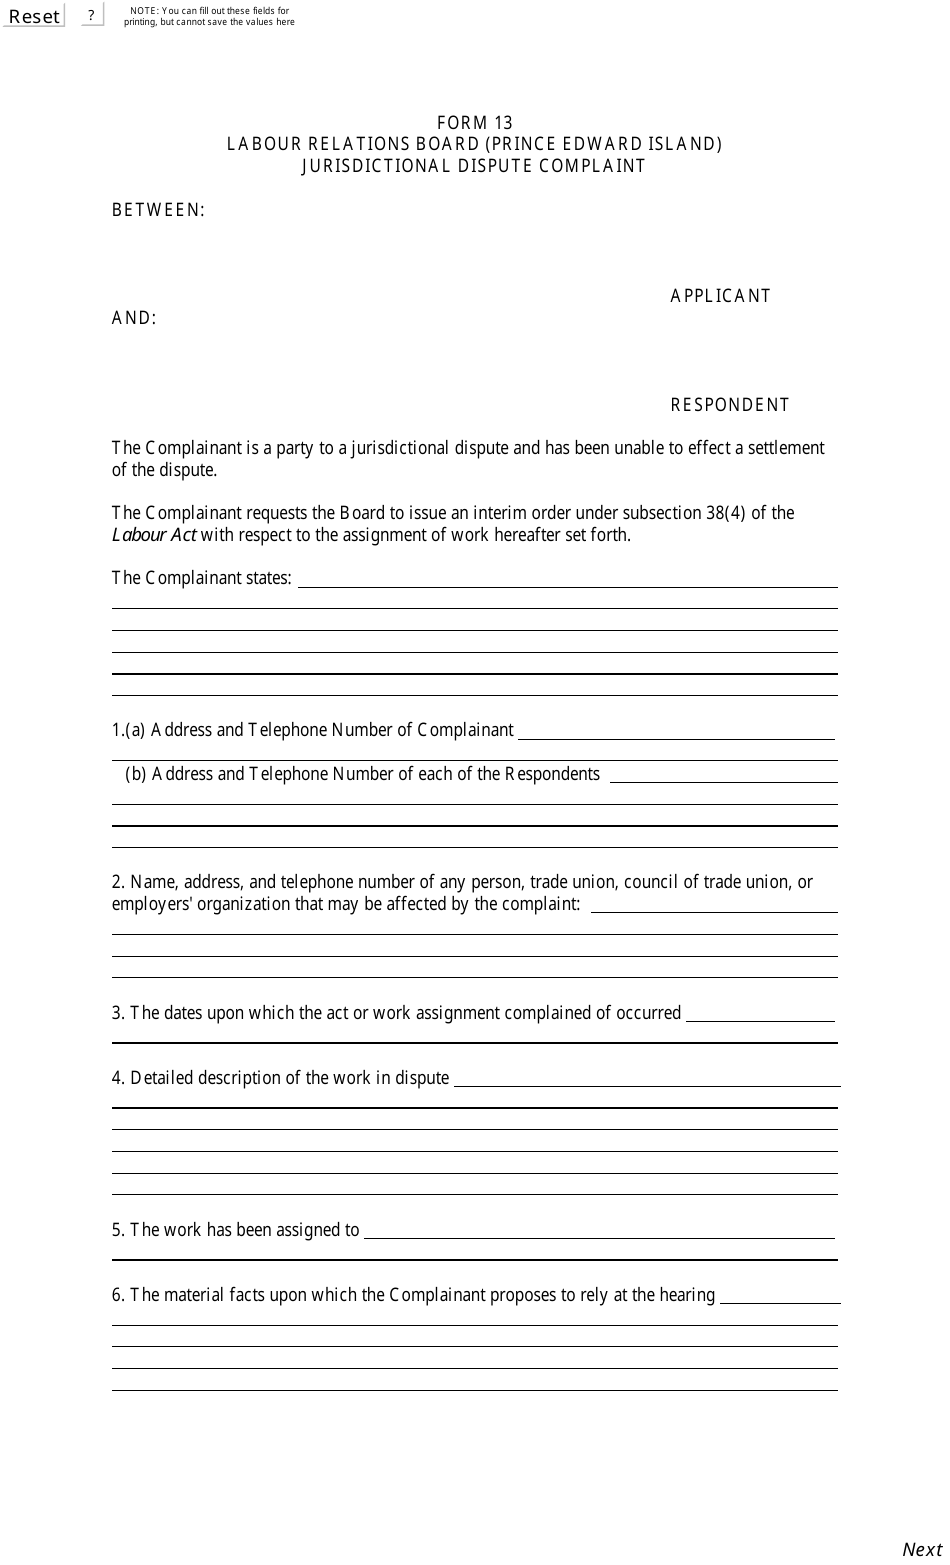 Form 13 Jurisdictional Dispute Complaint - Prince Edward Island, Canada, Page 1